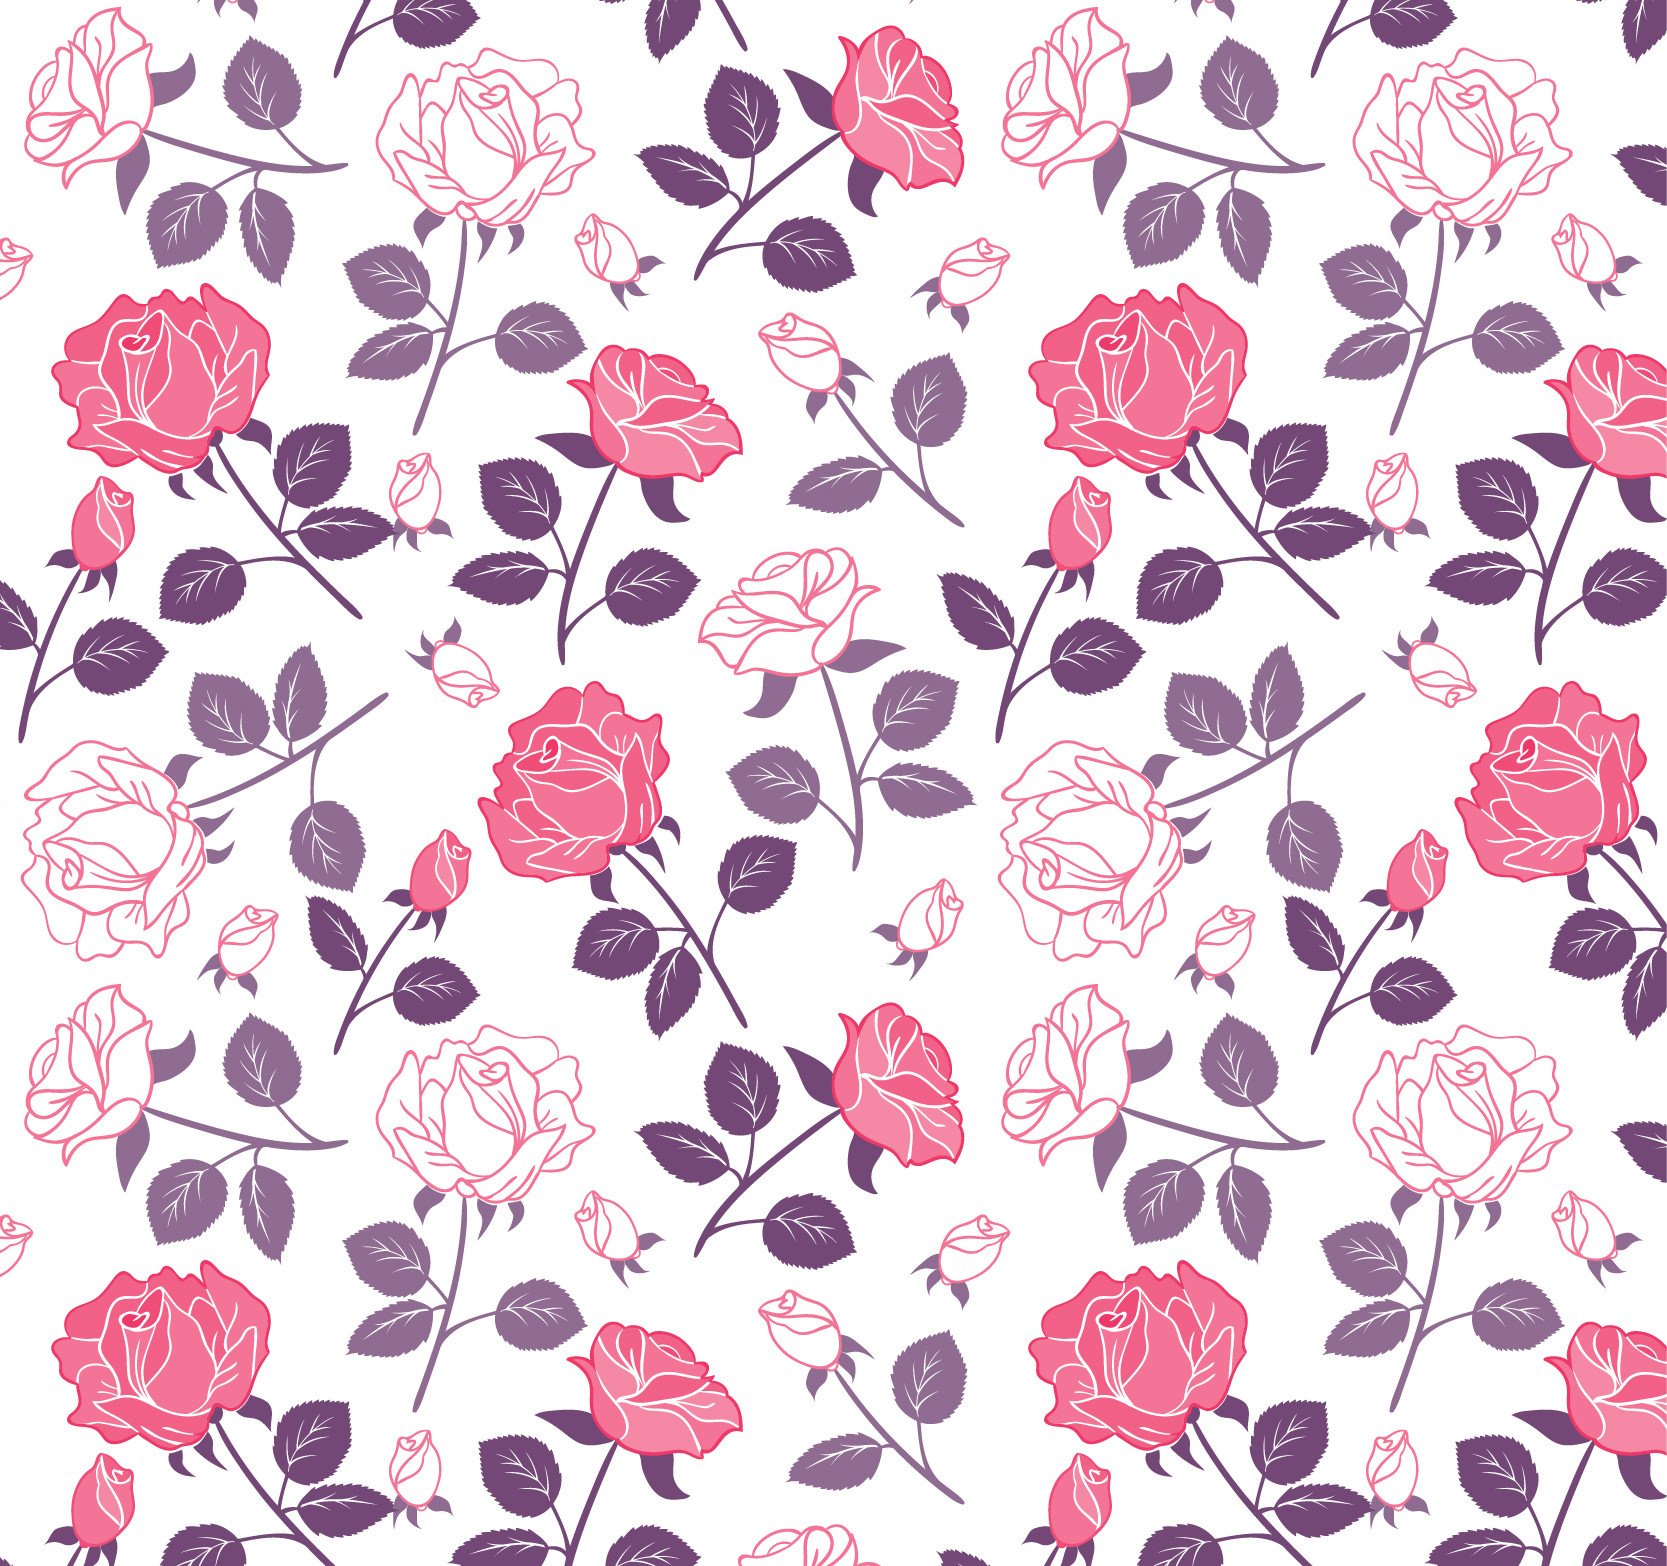 10+ Pink Floral Patterns | Photoshop Patterns | FreeCreatives